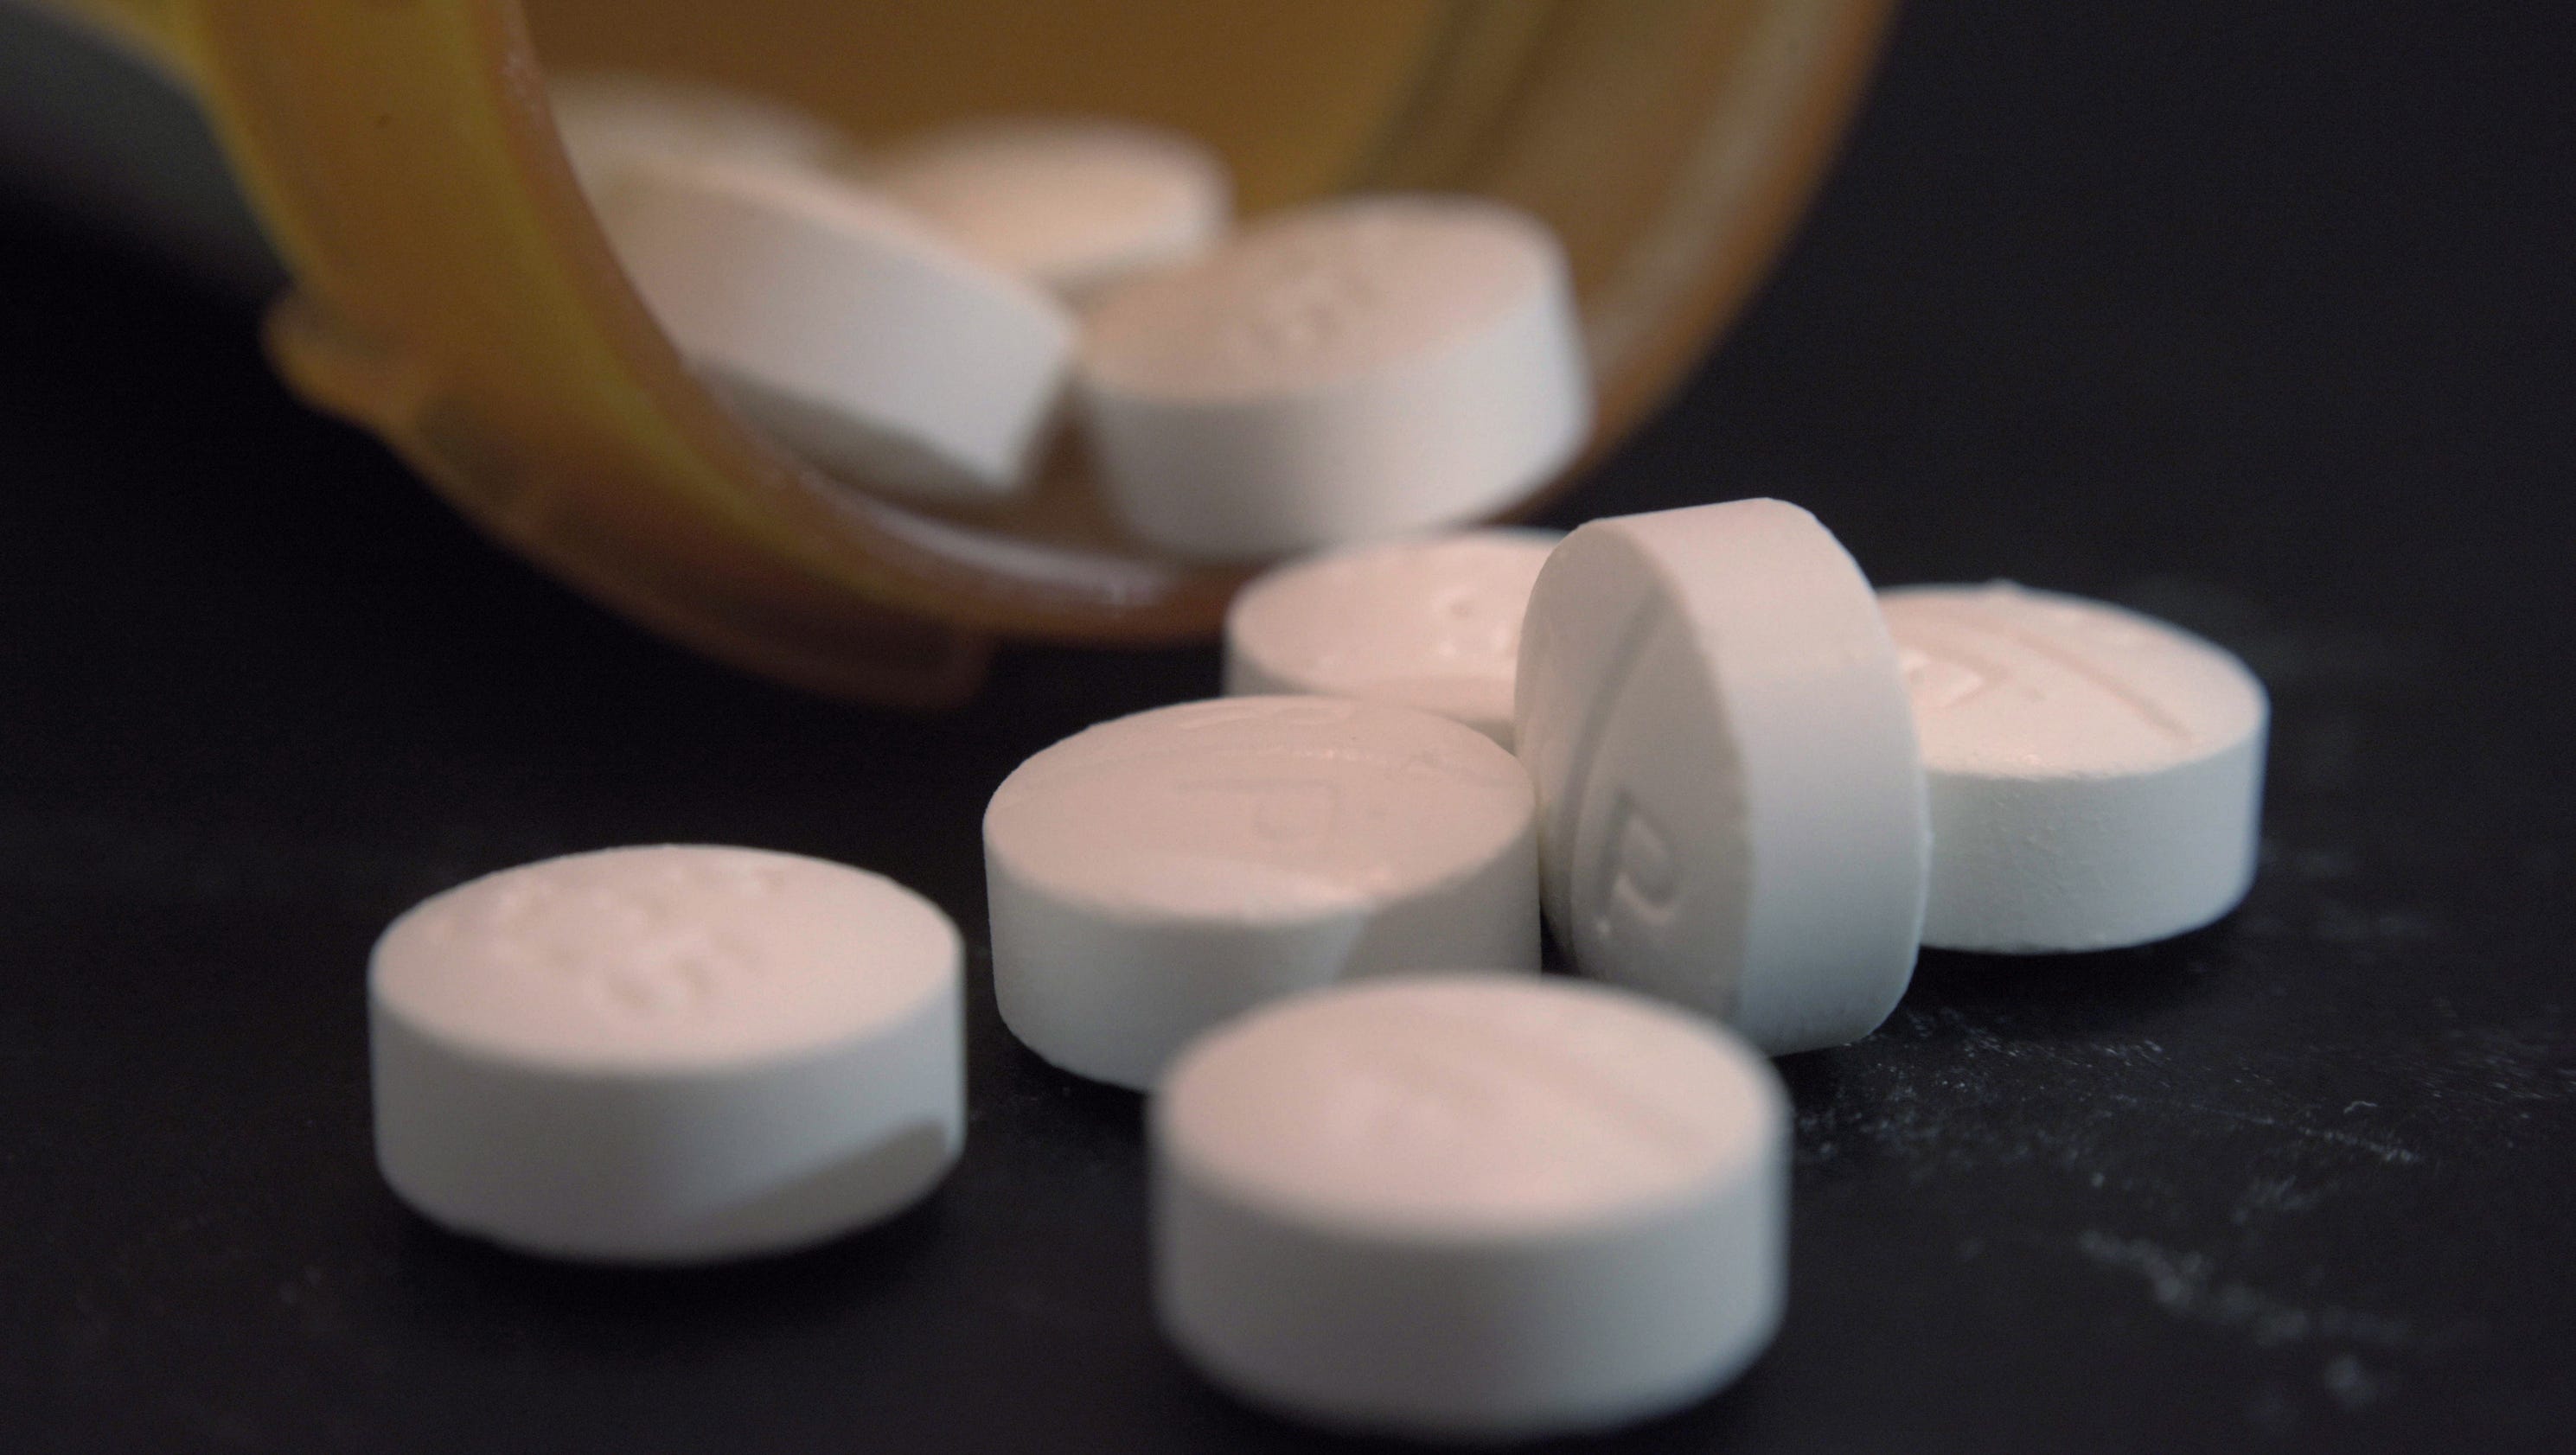 Cvs To Limit Opioid Drug Prescriptions Amid National Epidemic